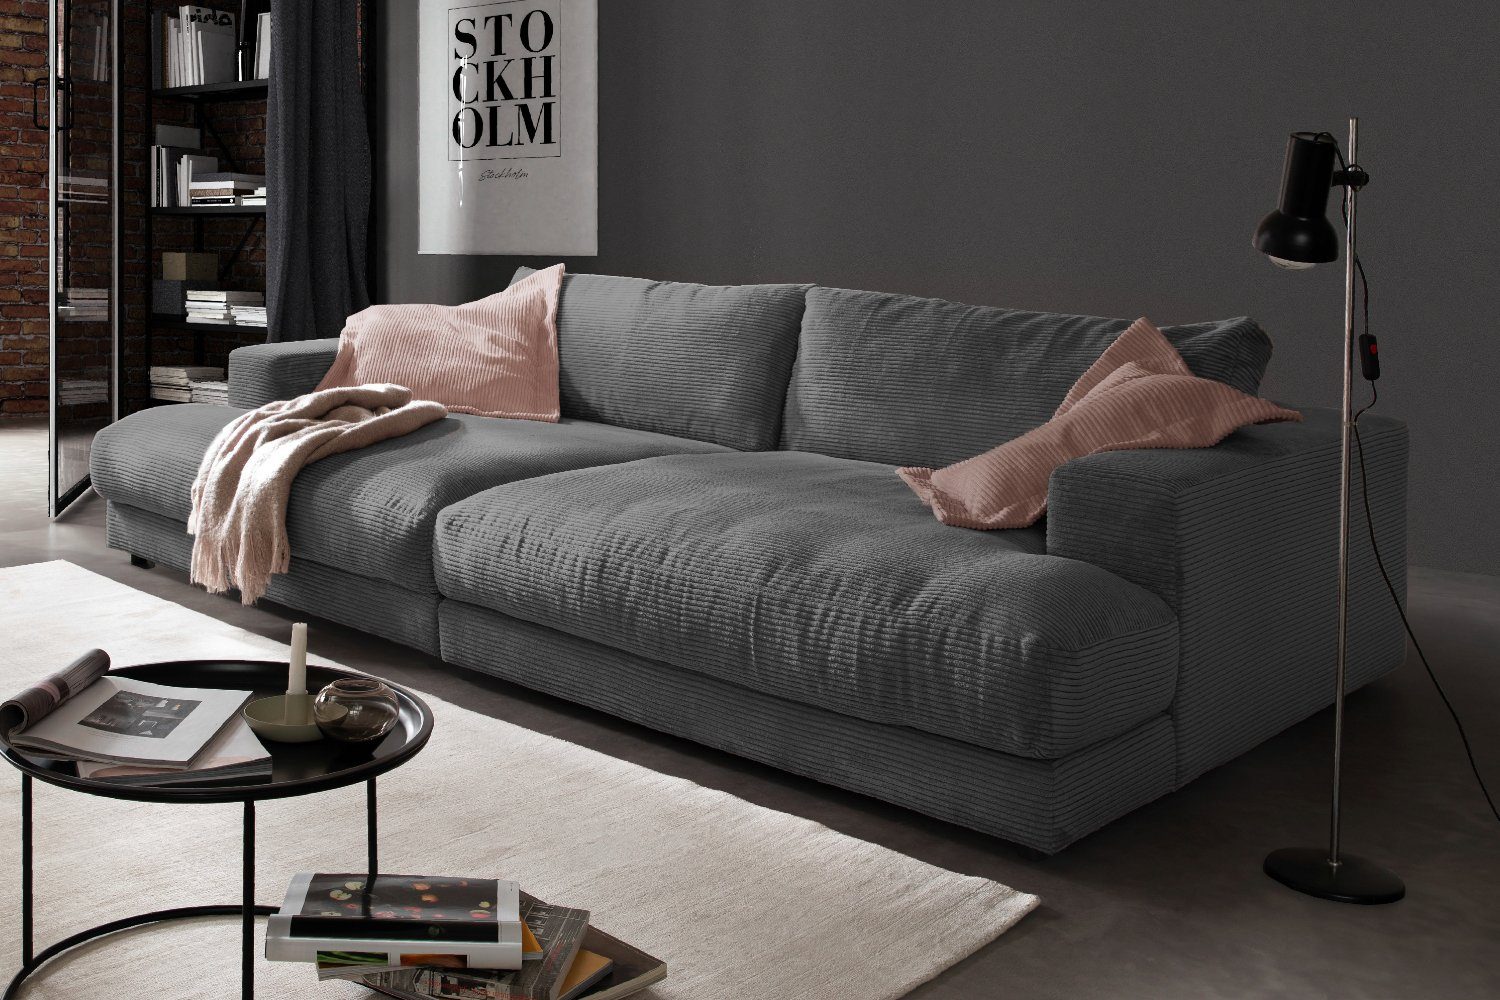 Stoff Sofa Big-Sofa Cord od. KAWOLA MADELINE, Farben verschiedene